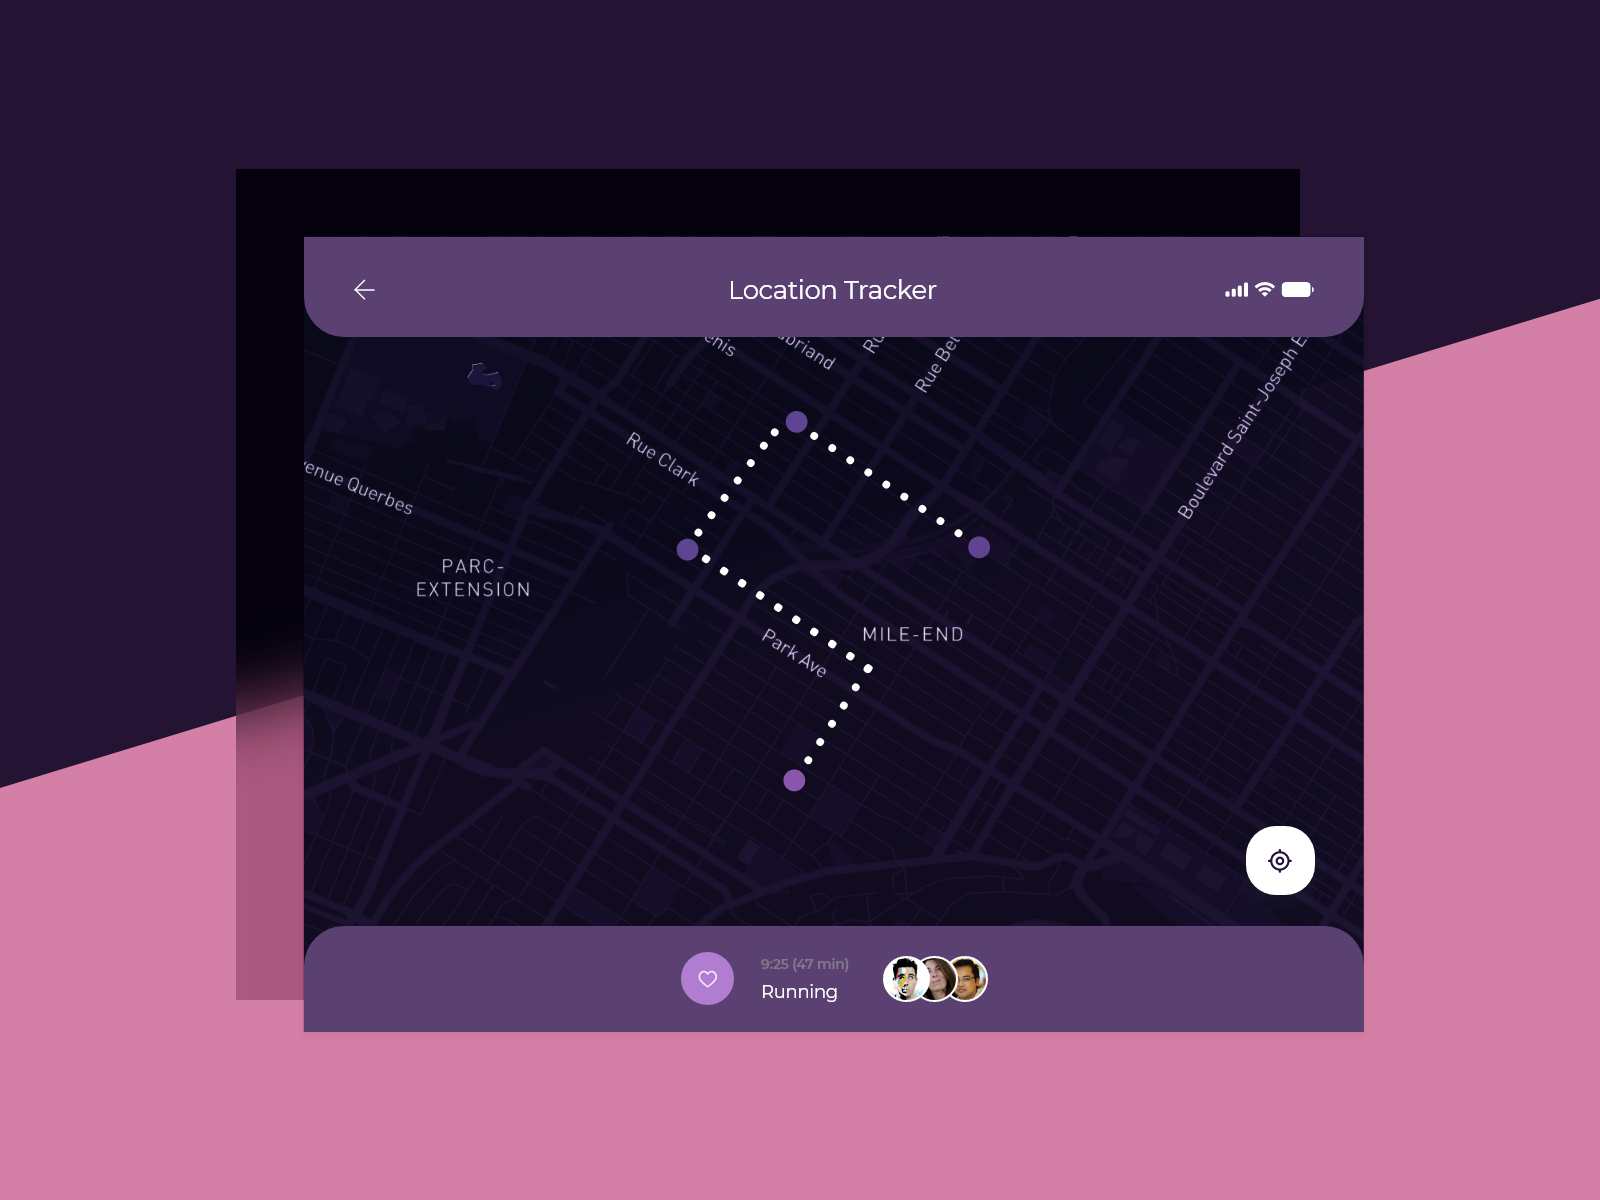 Location Tracker UI by Darius Kasiulynas on Dribbble